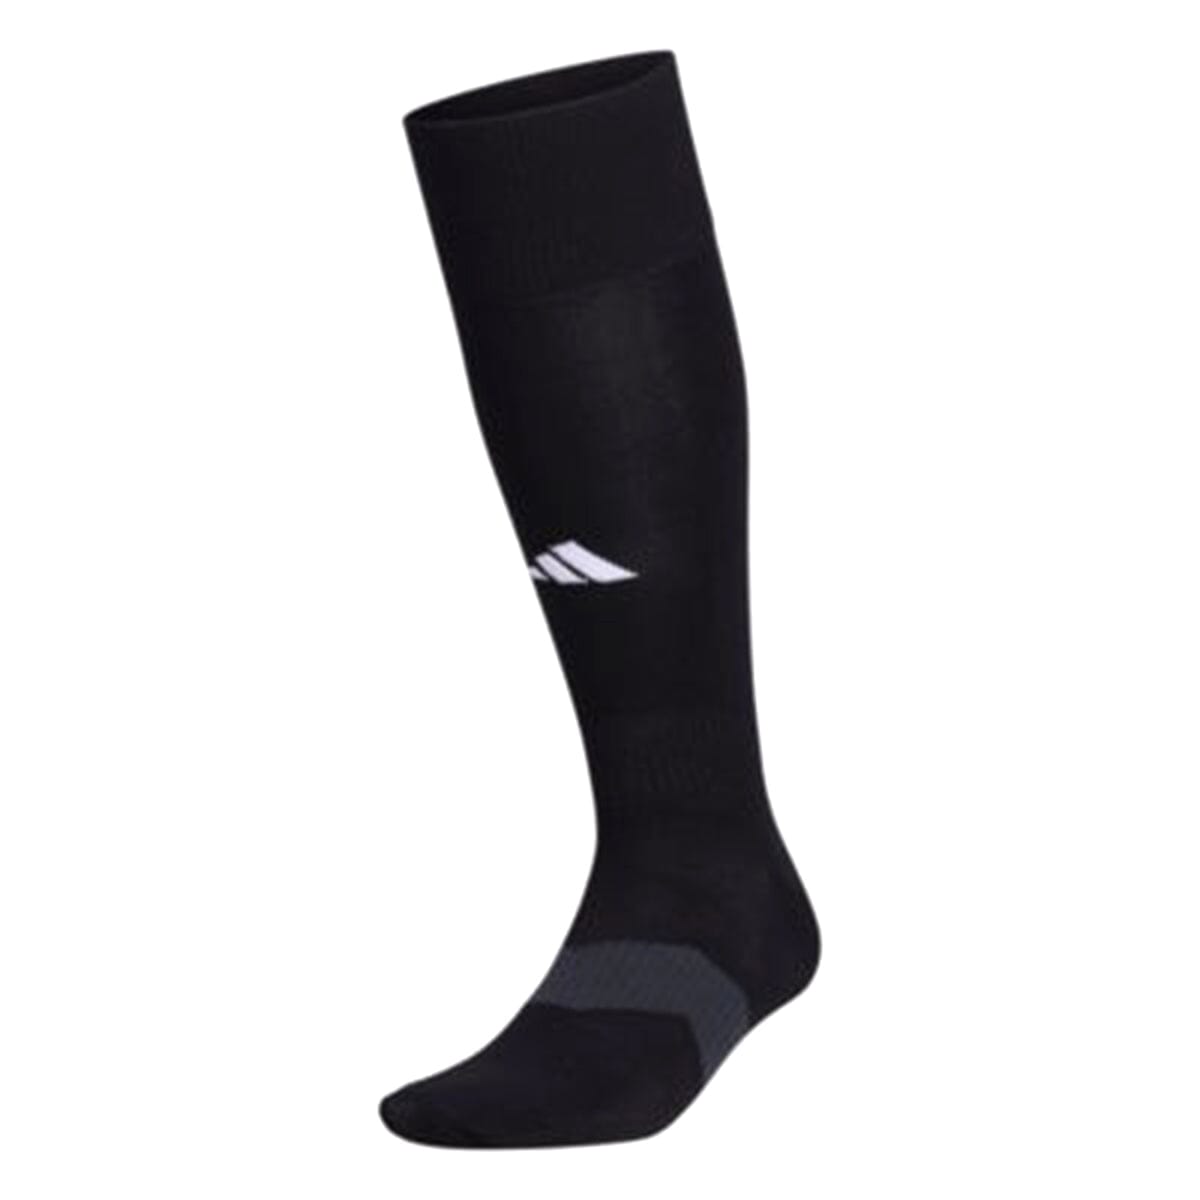 adidas Metro 6 OTC Soccer Socks Soccer Socks Adidas Small Black / Night Grey / White 